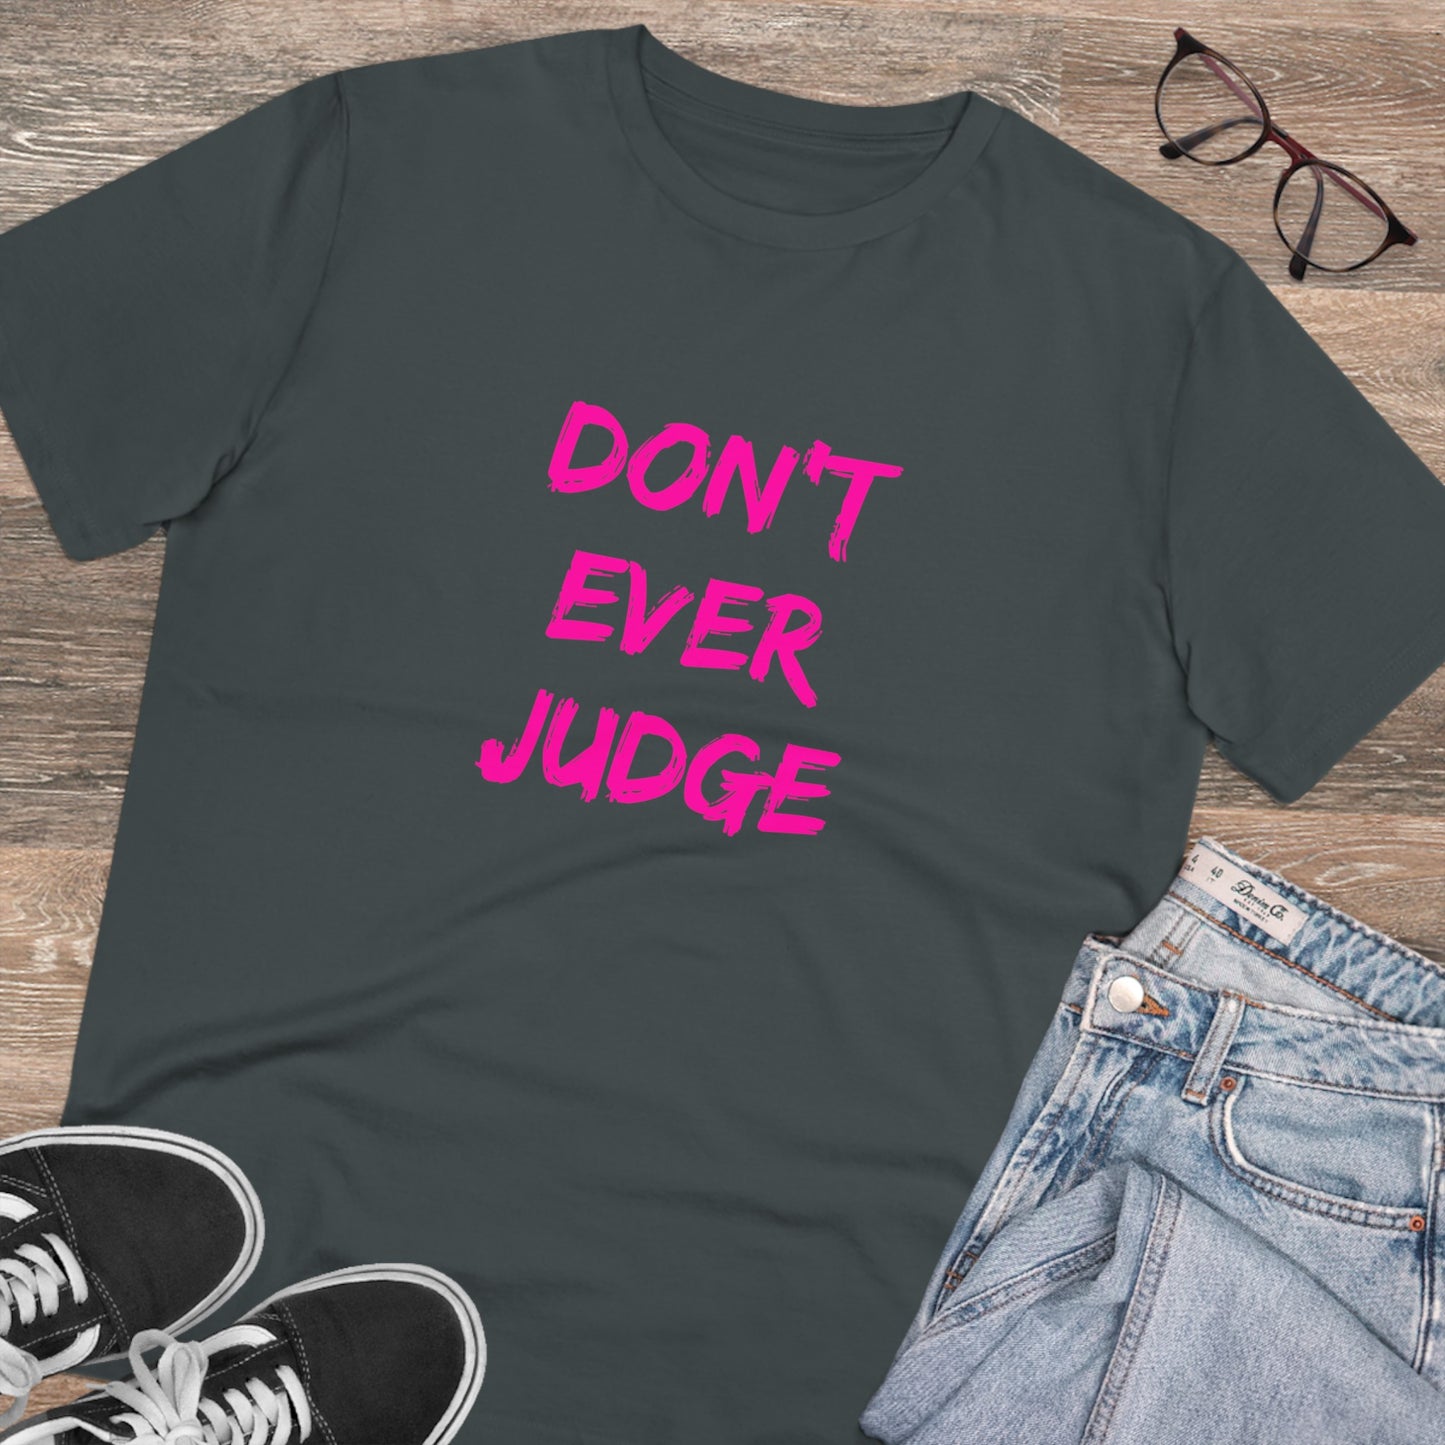 Don’t Judge - unisex